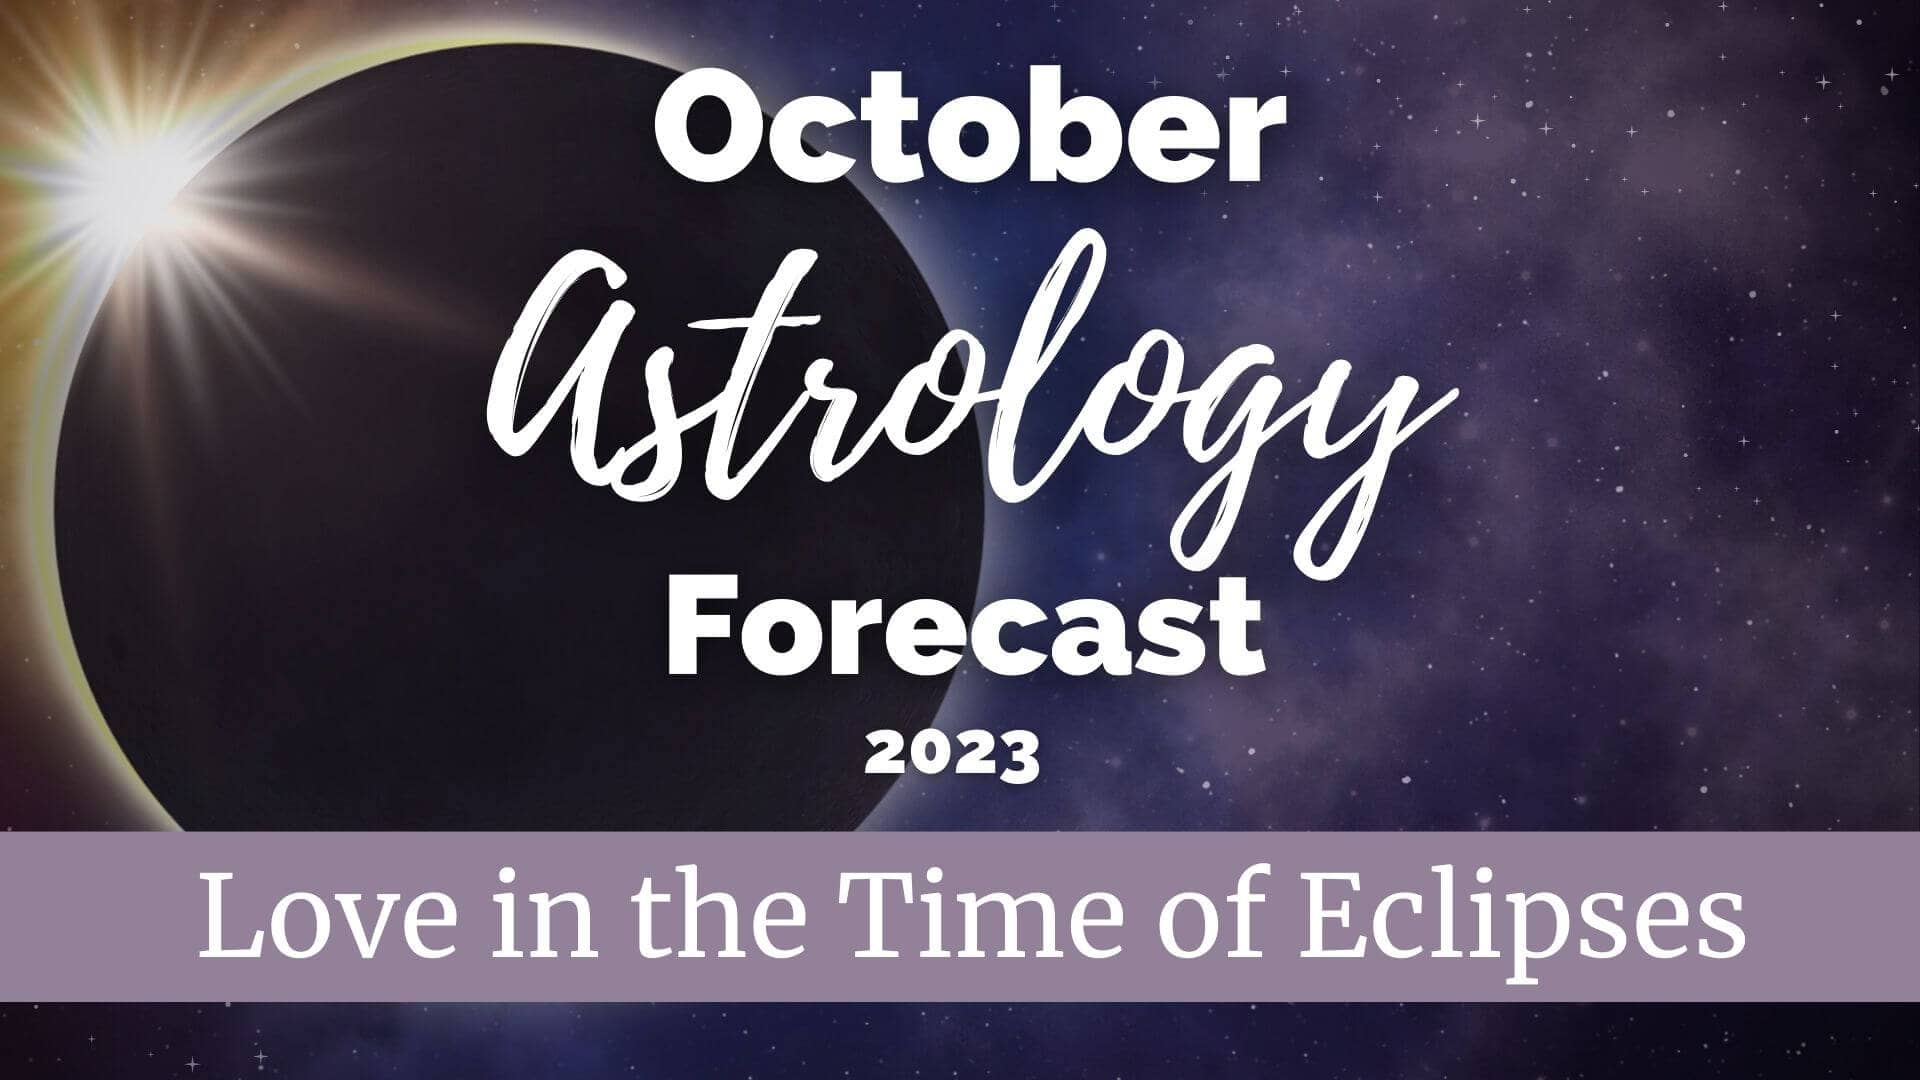 October astrology forecast